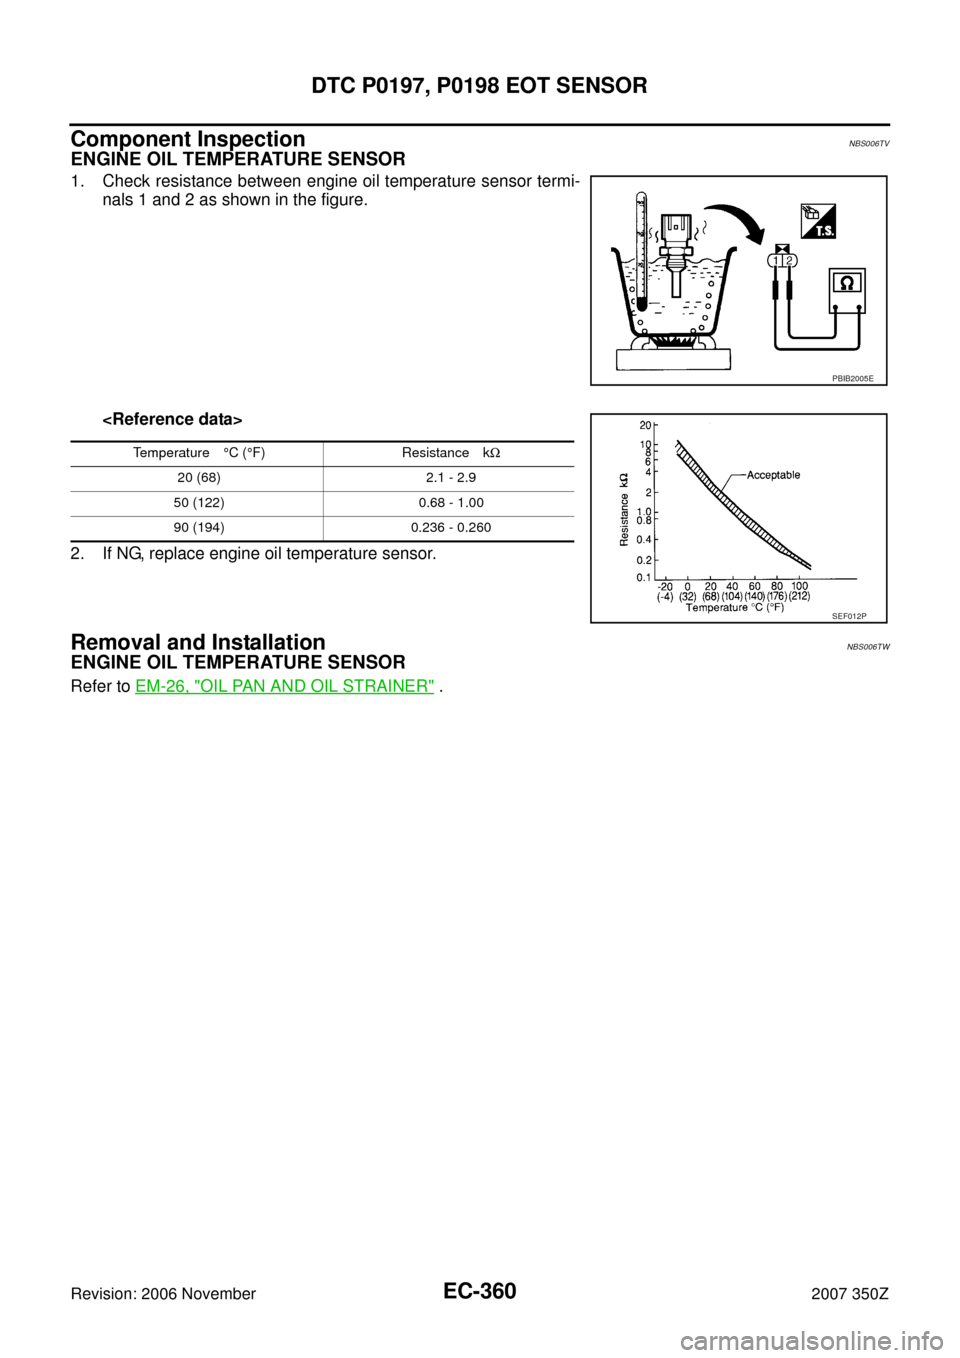 NISSAN 350Z 2007 Z33 Engine Control Owners Manual EC-360
DTC P0197, P0198 EOT SENSOR
Revision: 2006 November2007 350Z
Component InspectionNBS006TV
ENGINE OIL TEMPERATURE SENSOR
1. Check resistance between engine oil temperature sensor termi-
nals 1 a